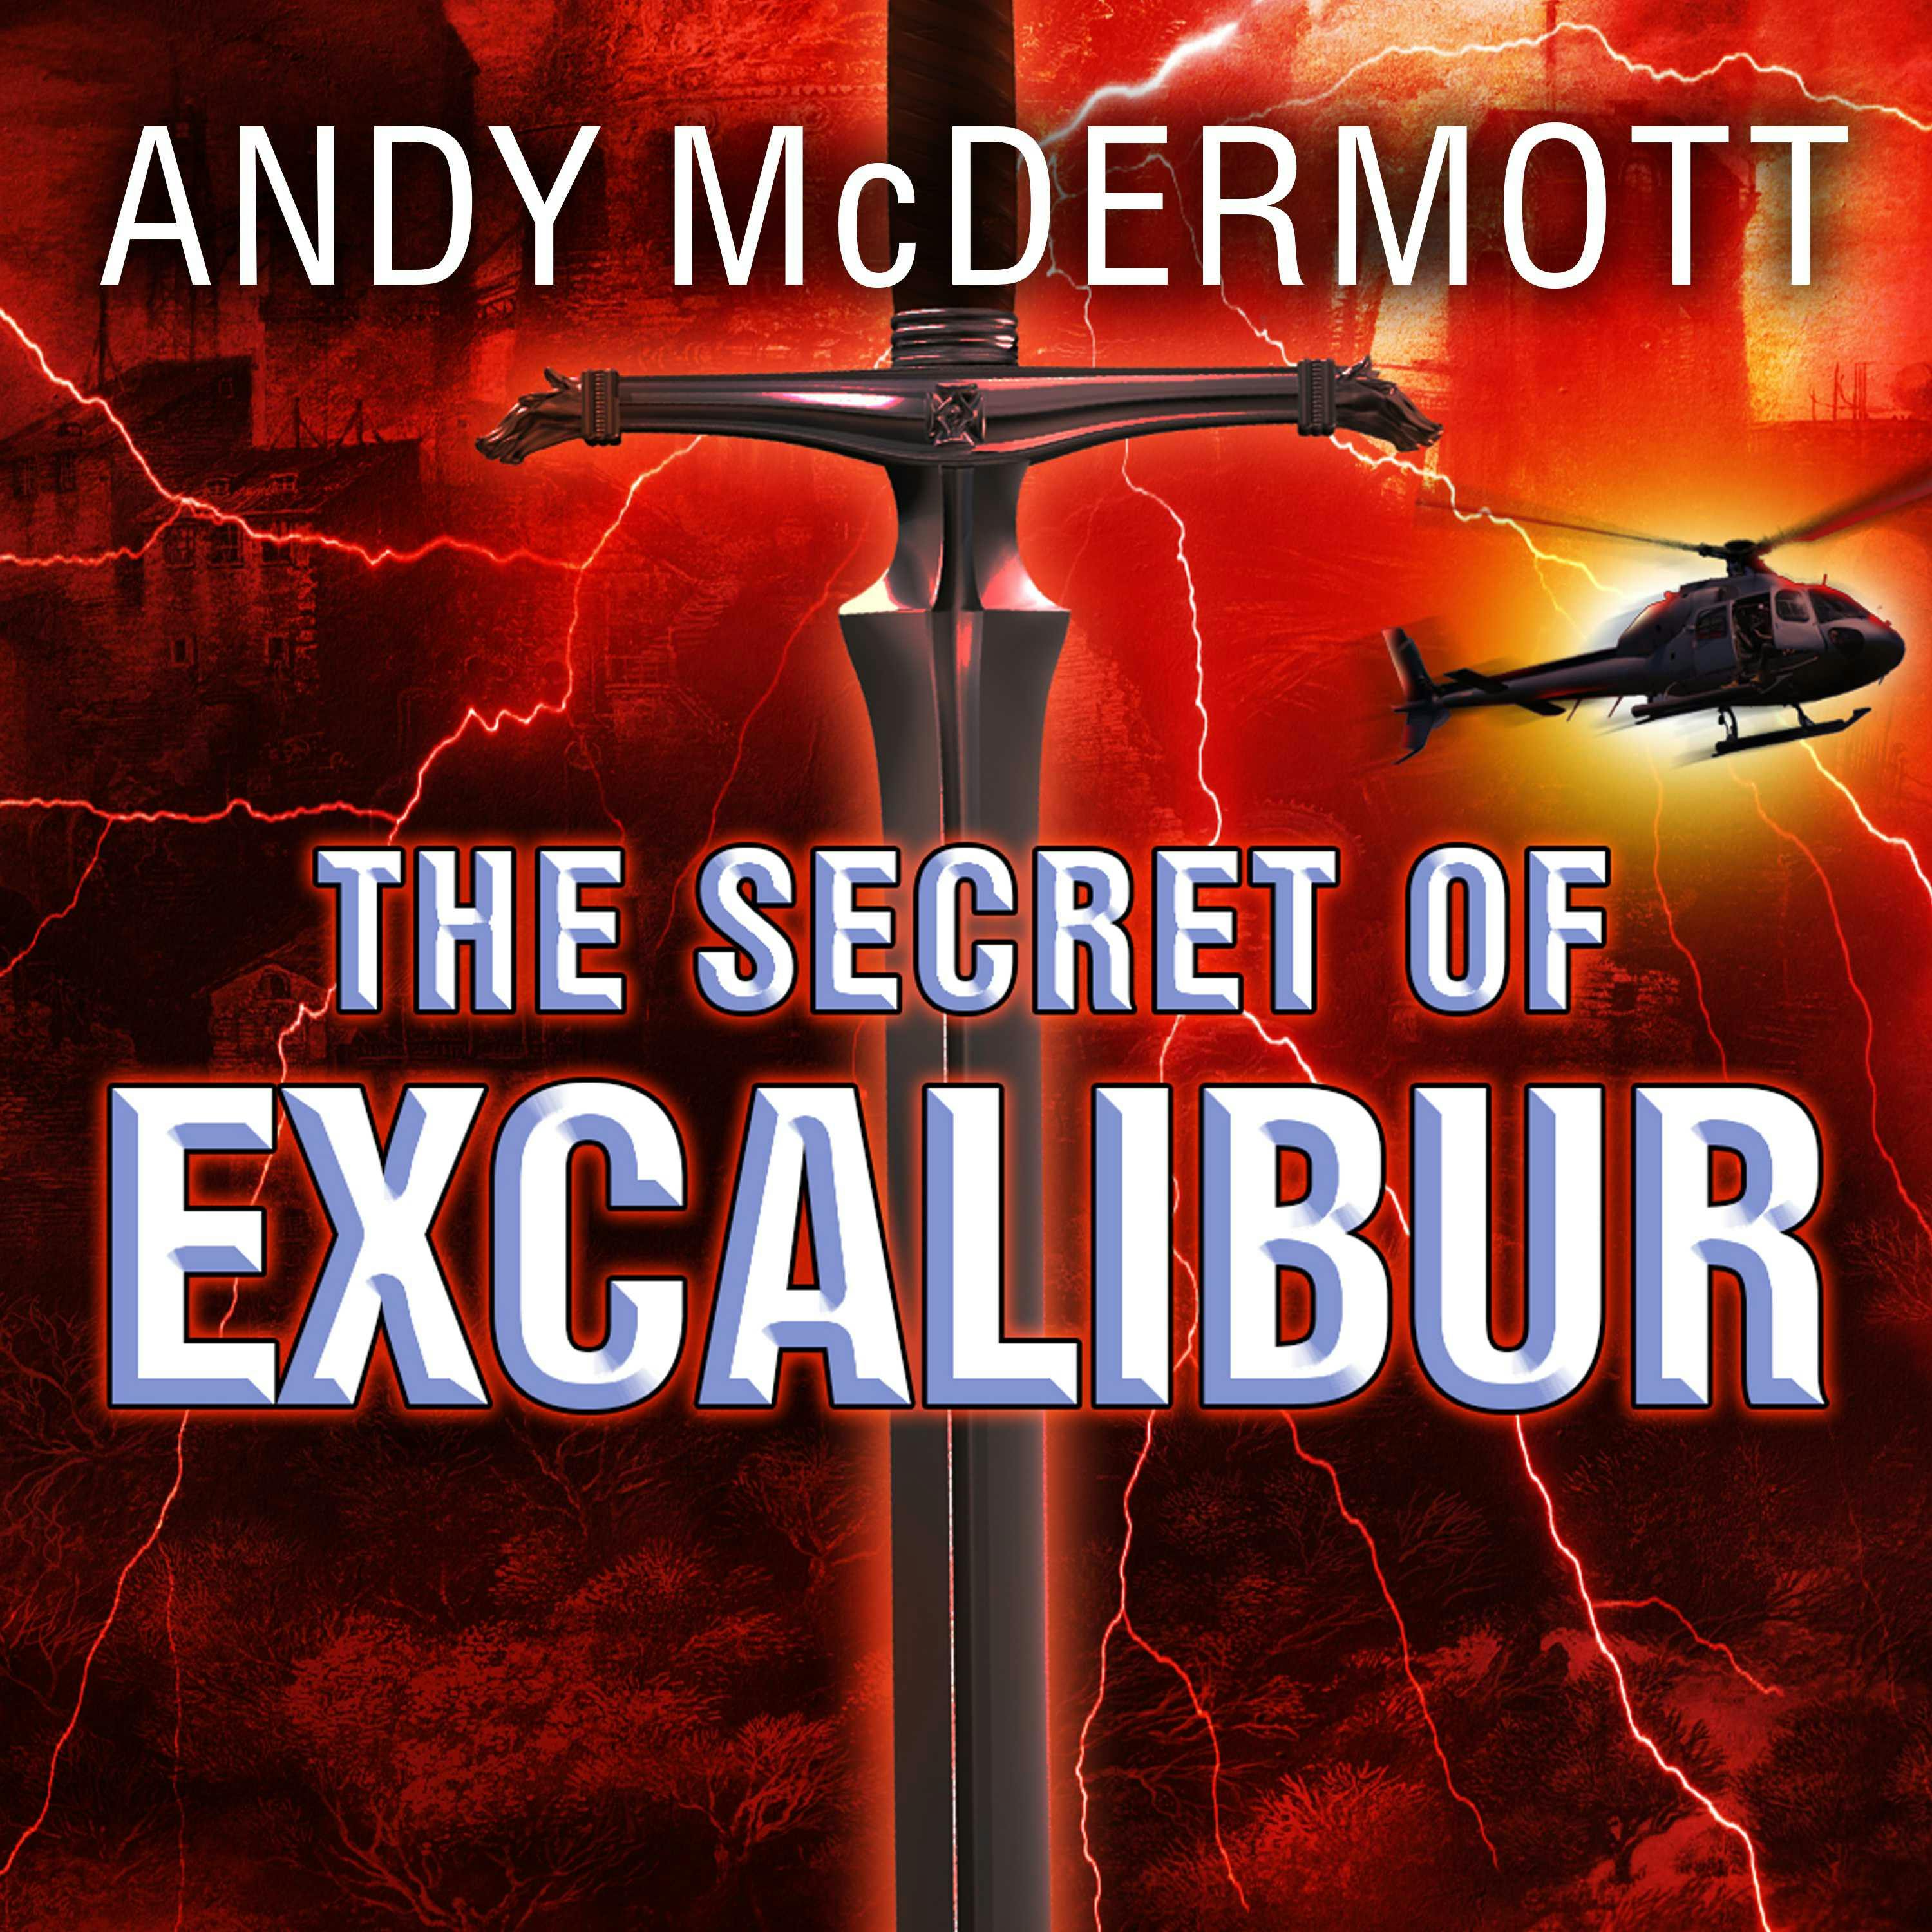 The Secret of Excalibur: A Novel - Andy McDermott